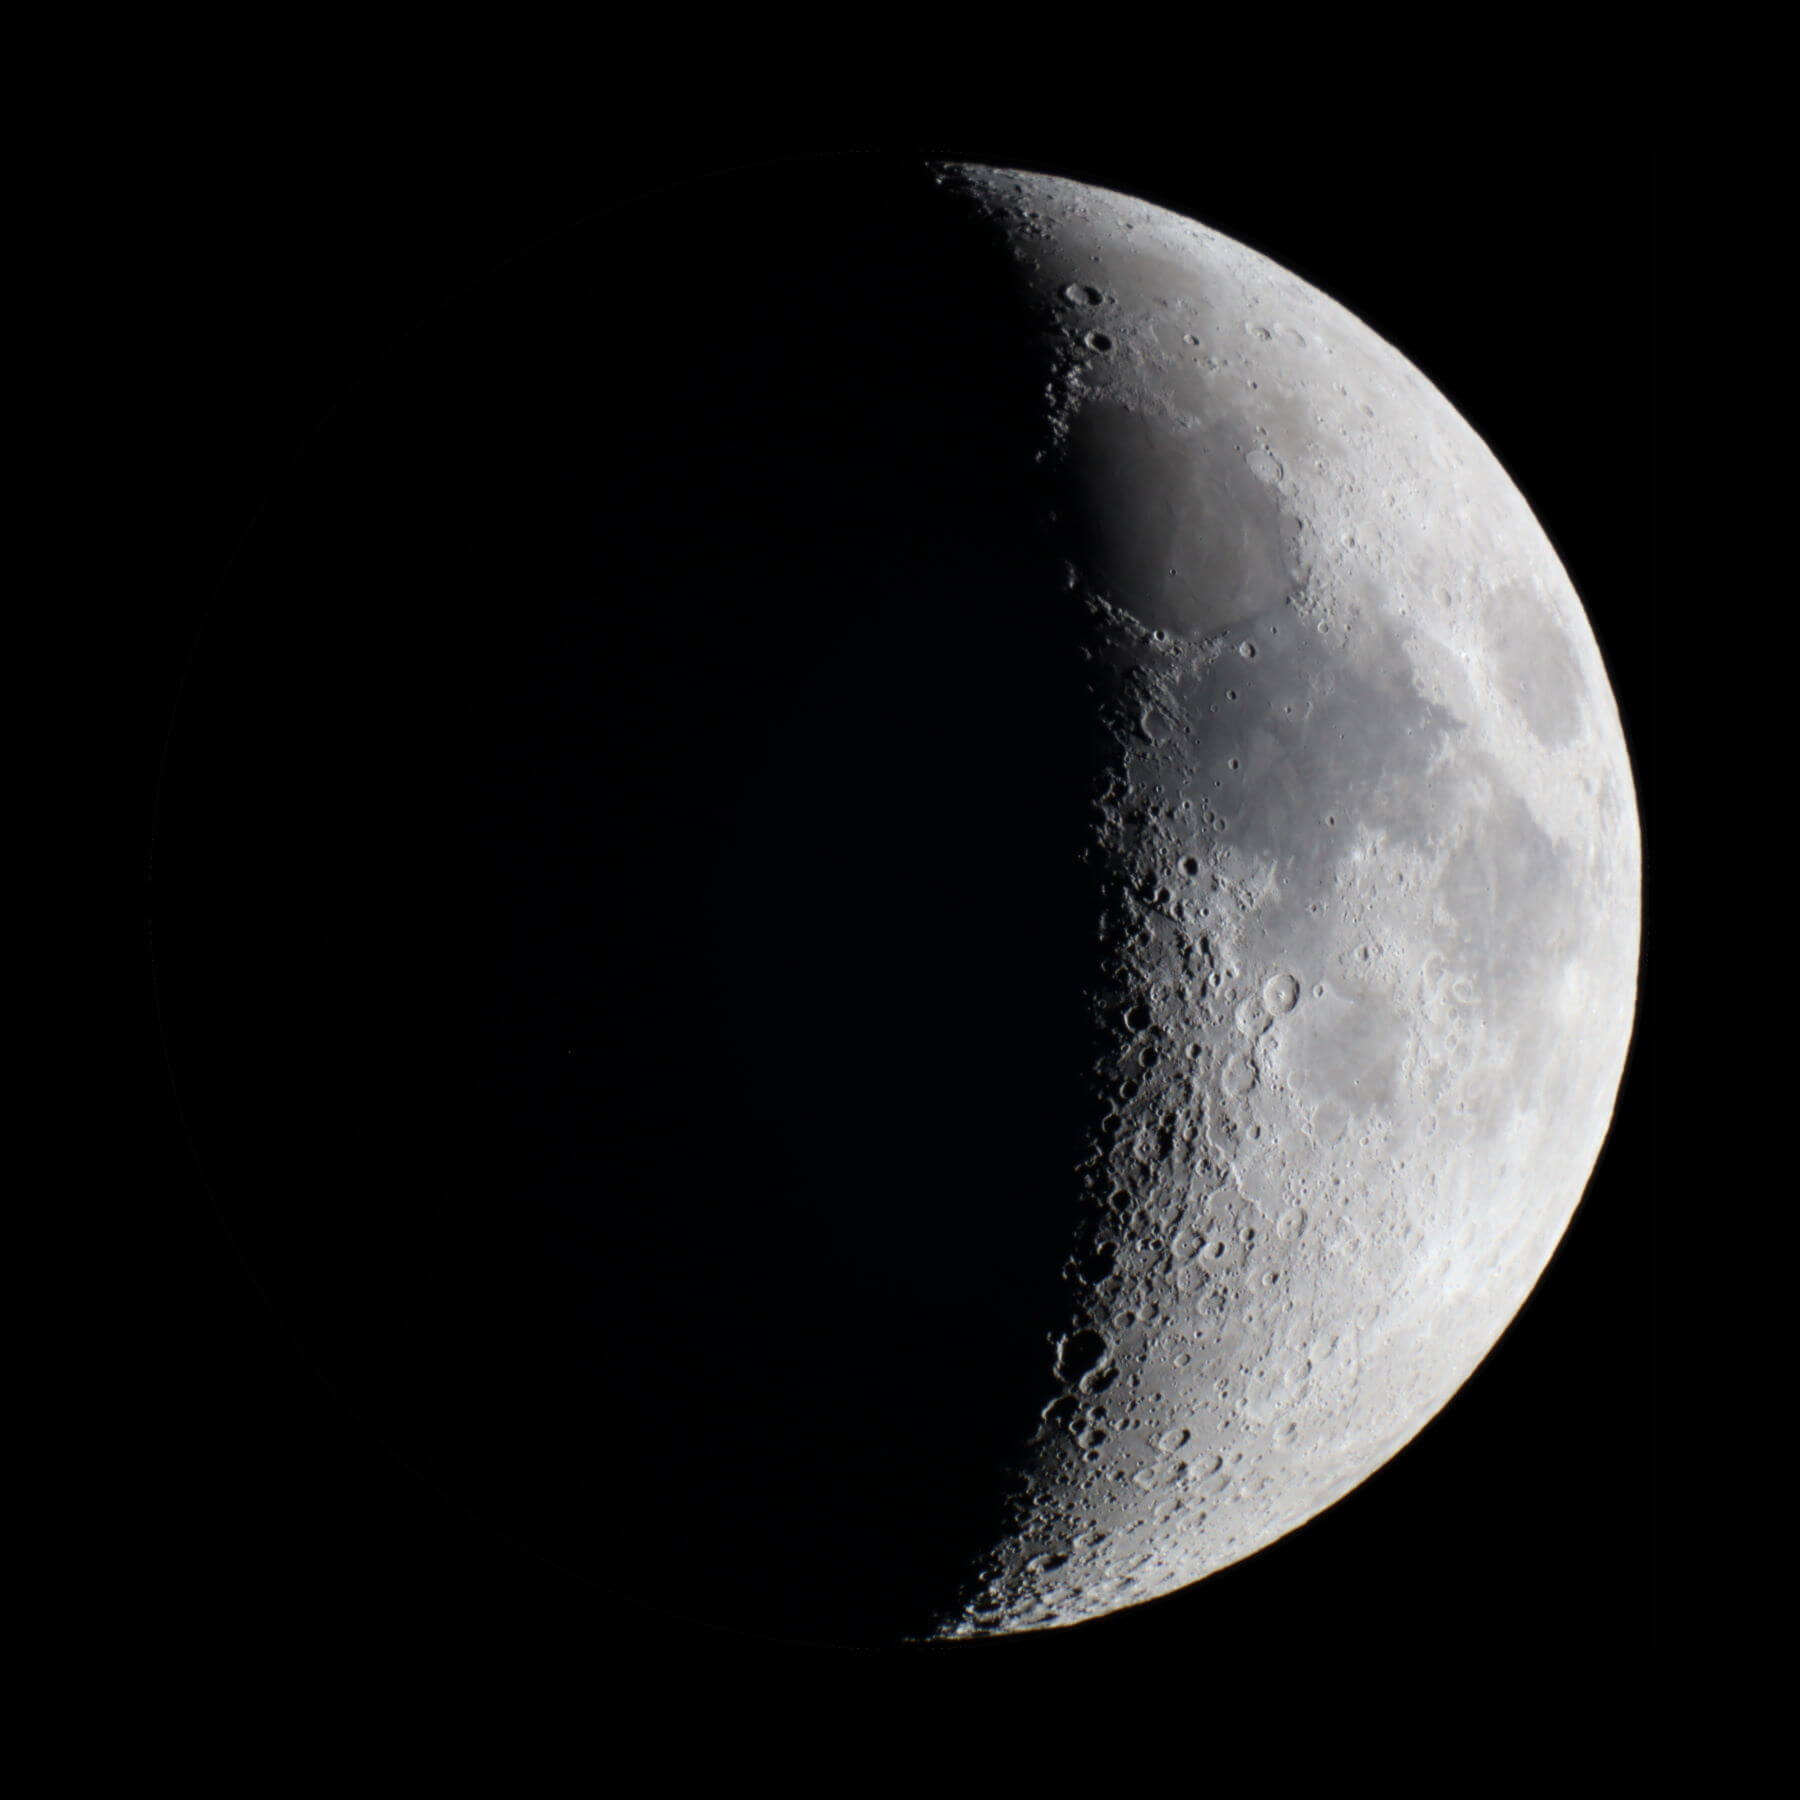 Waxing crescent Moon, 34% illumination